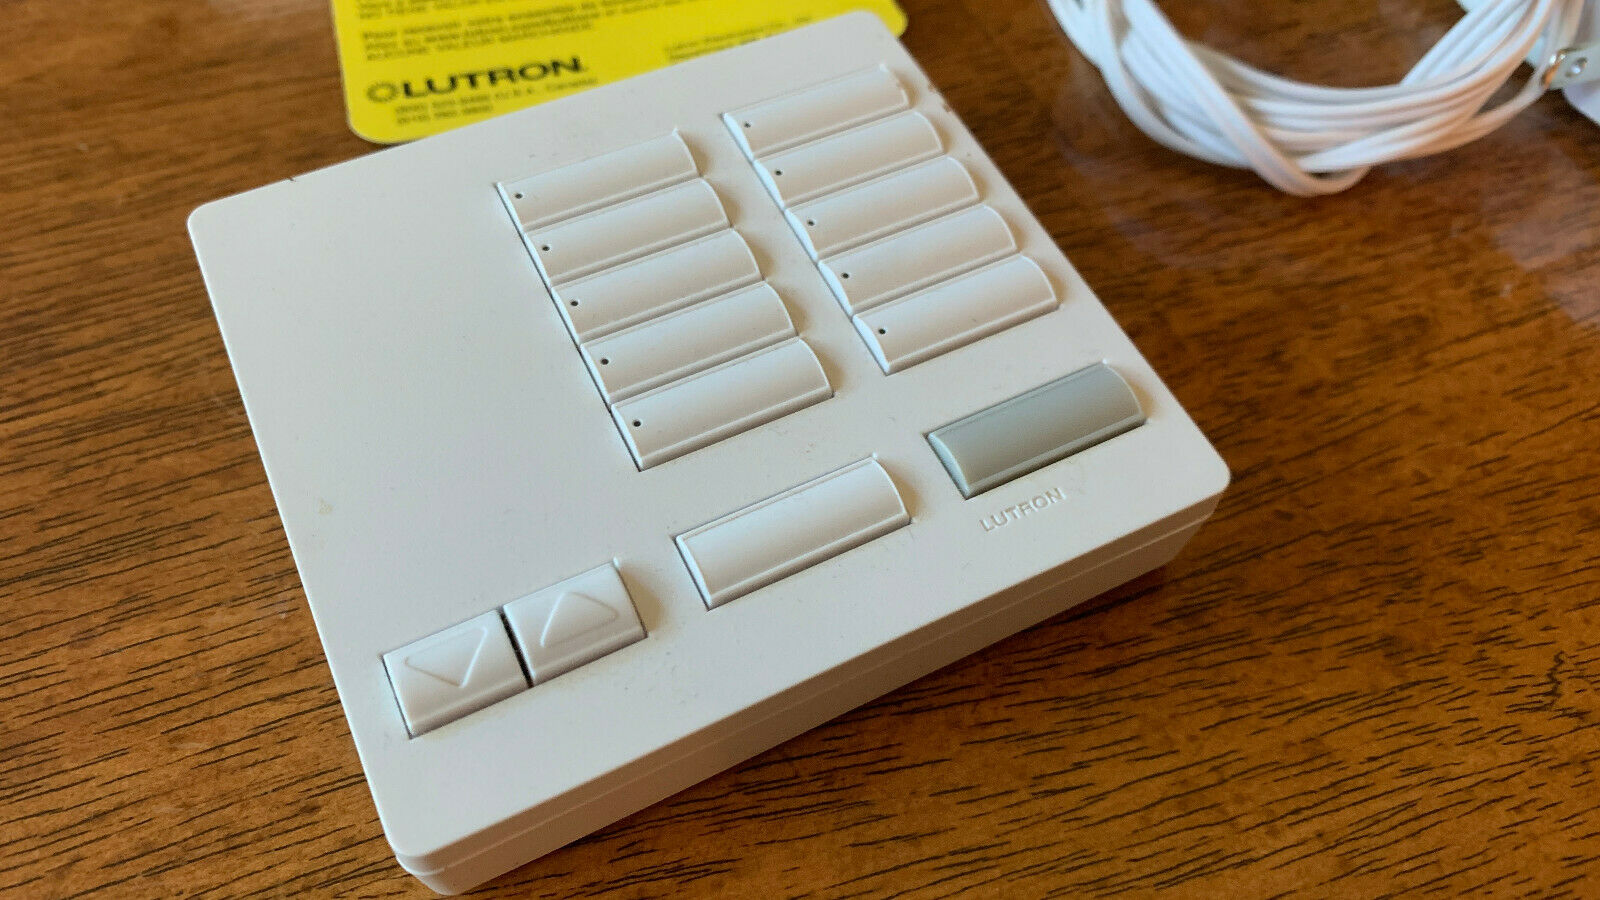 lutron homeworks tabletop keypad